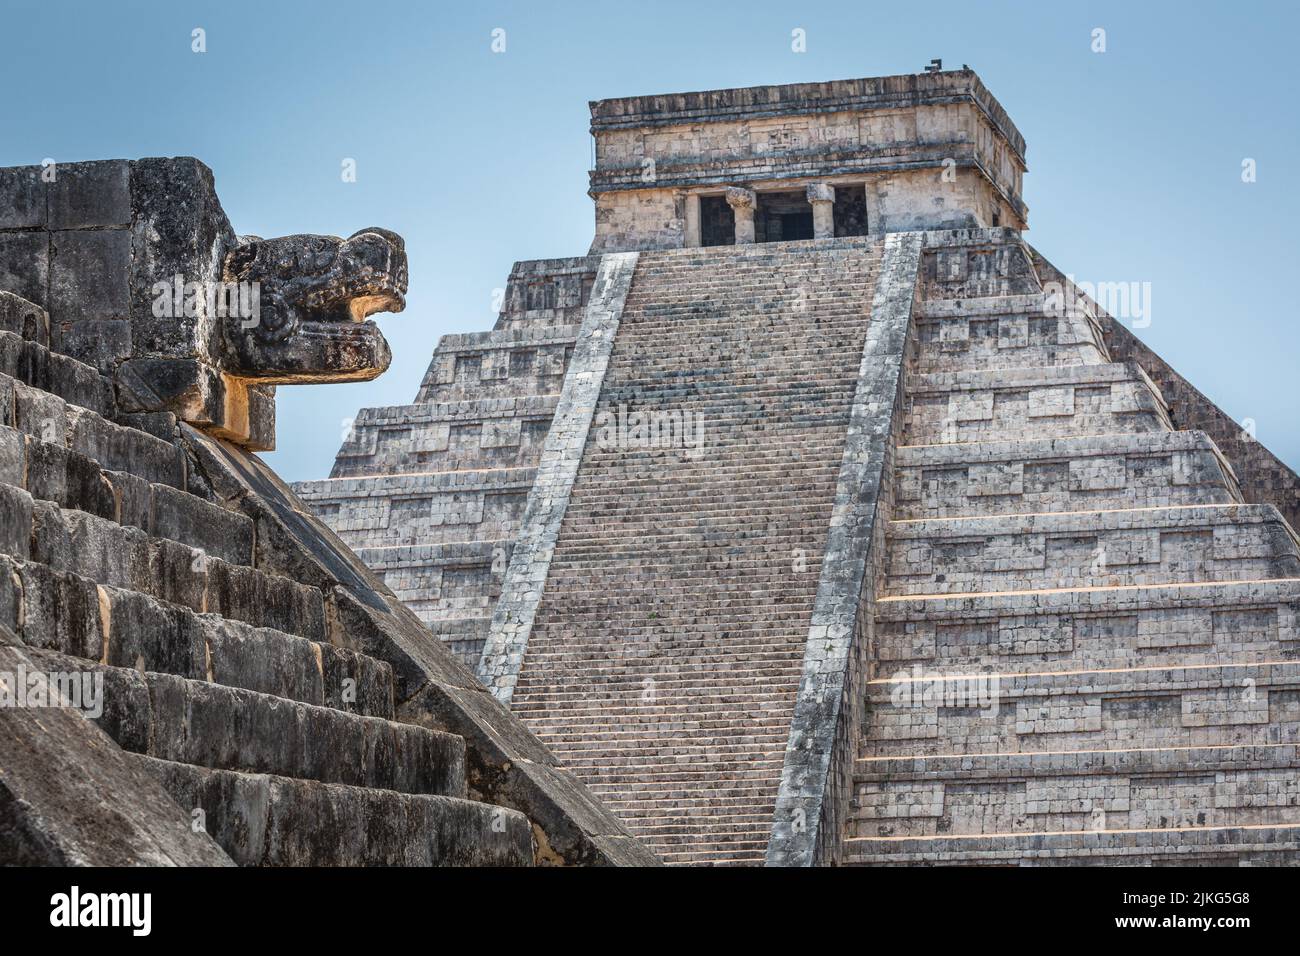 Vieille ruine de la pyramide de Chichen Itza kukulcan, civilisation maya ancienne Banque D'Images